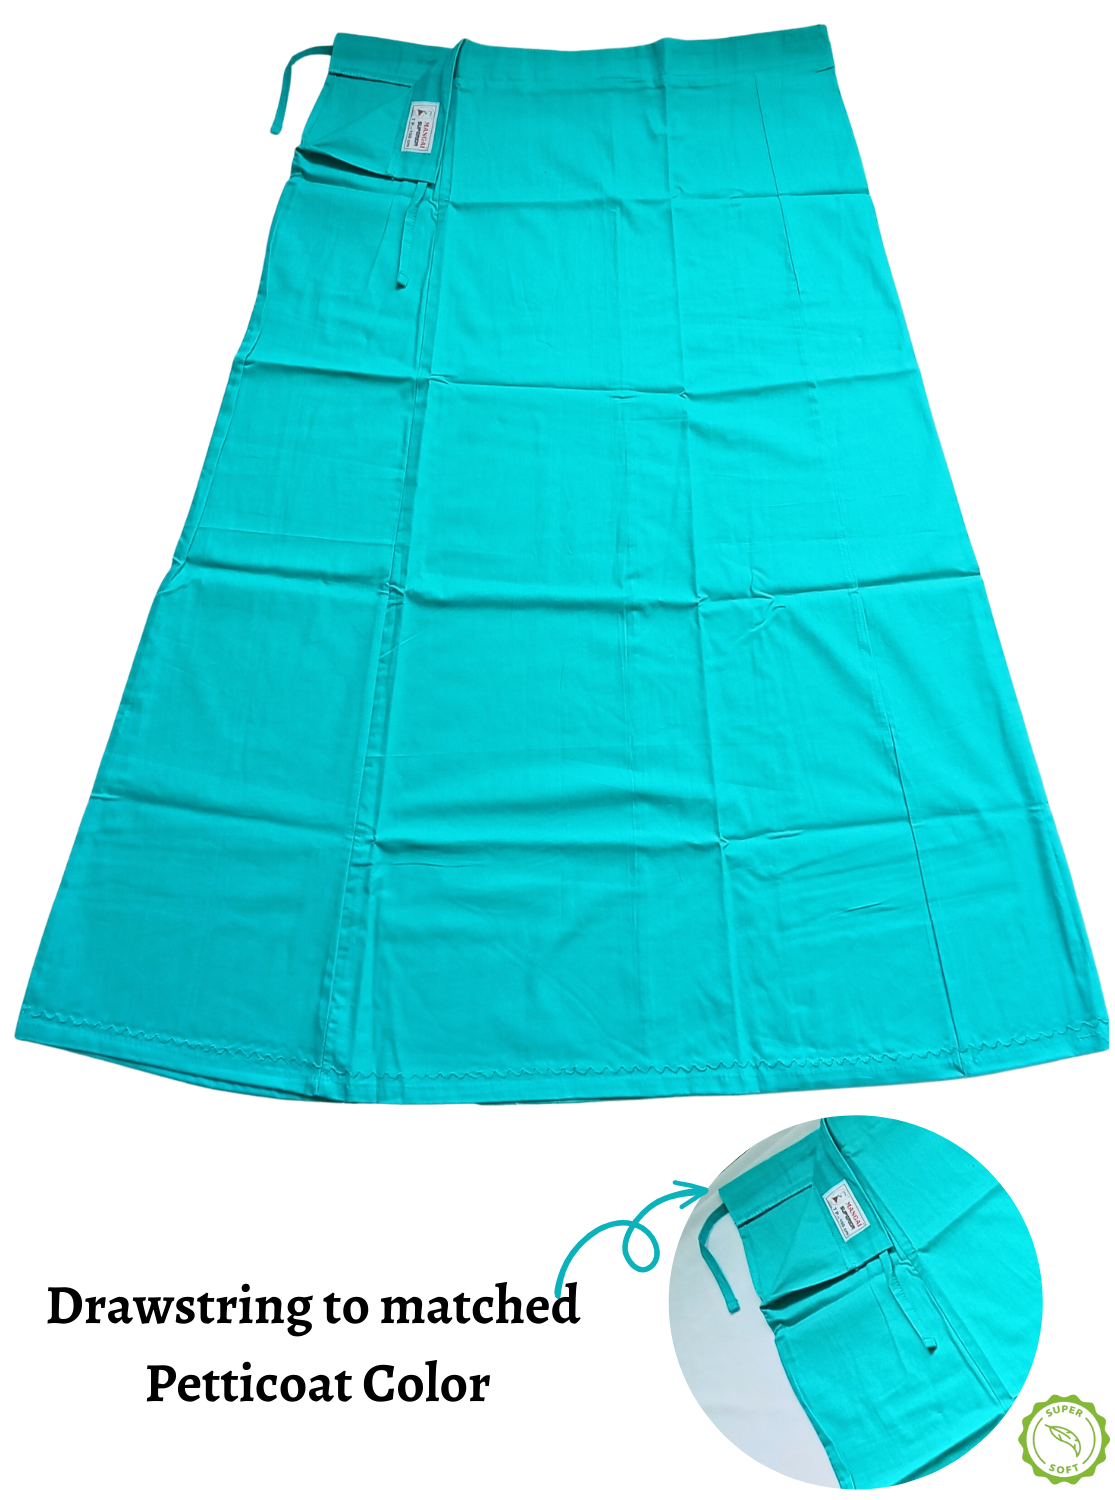 MANGAI Superior Cotton Petticoats - 8 Part Premium Embroidery Petticoats